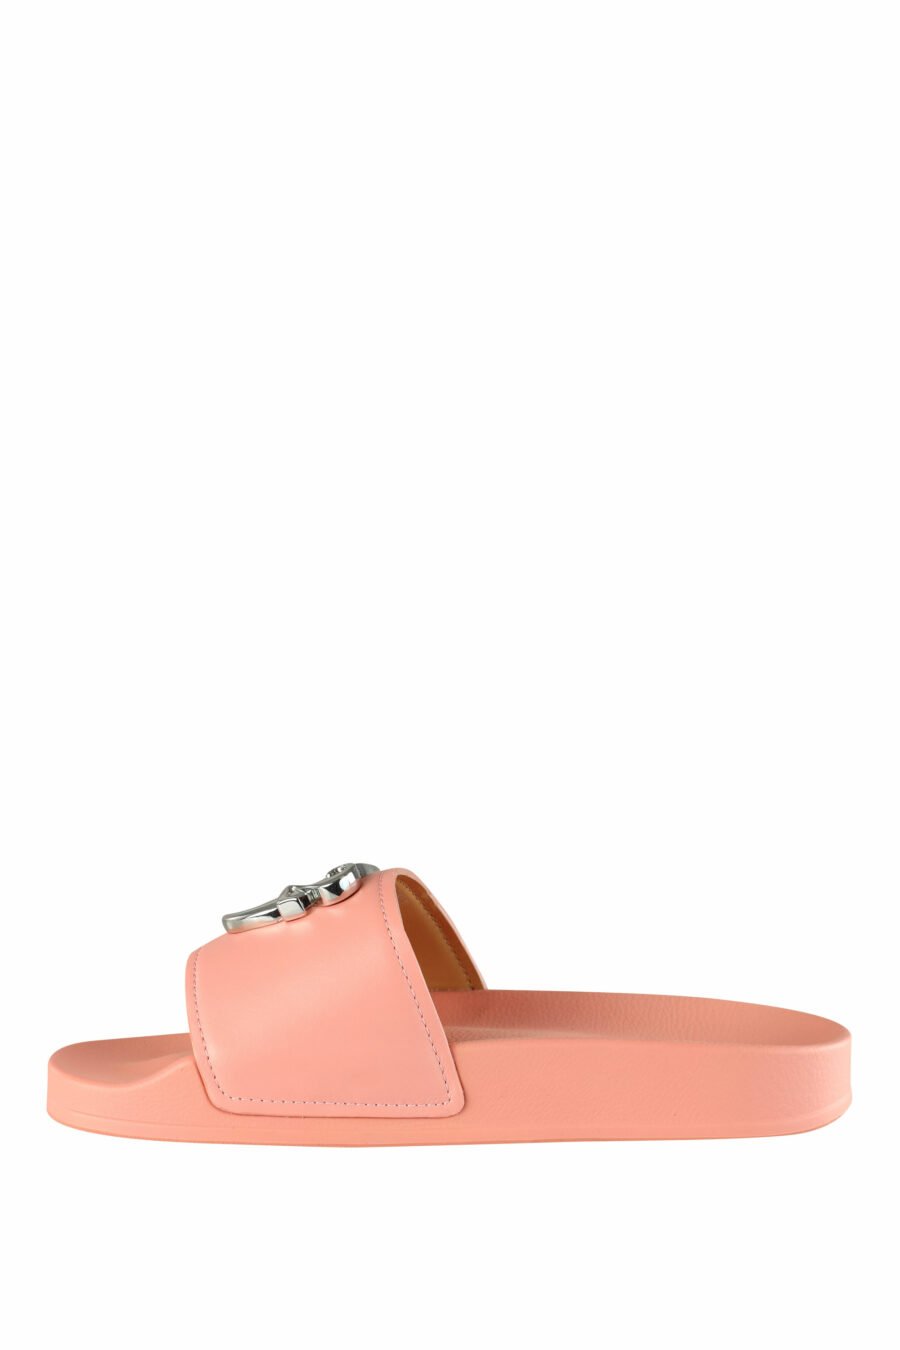 Pink flip flops with metal "D2" logo - IMG 1305